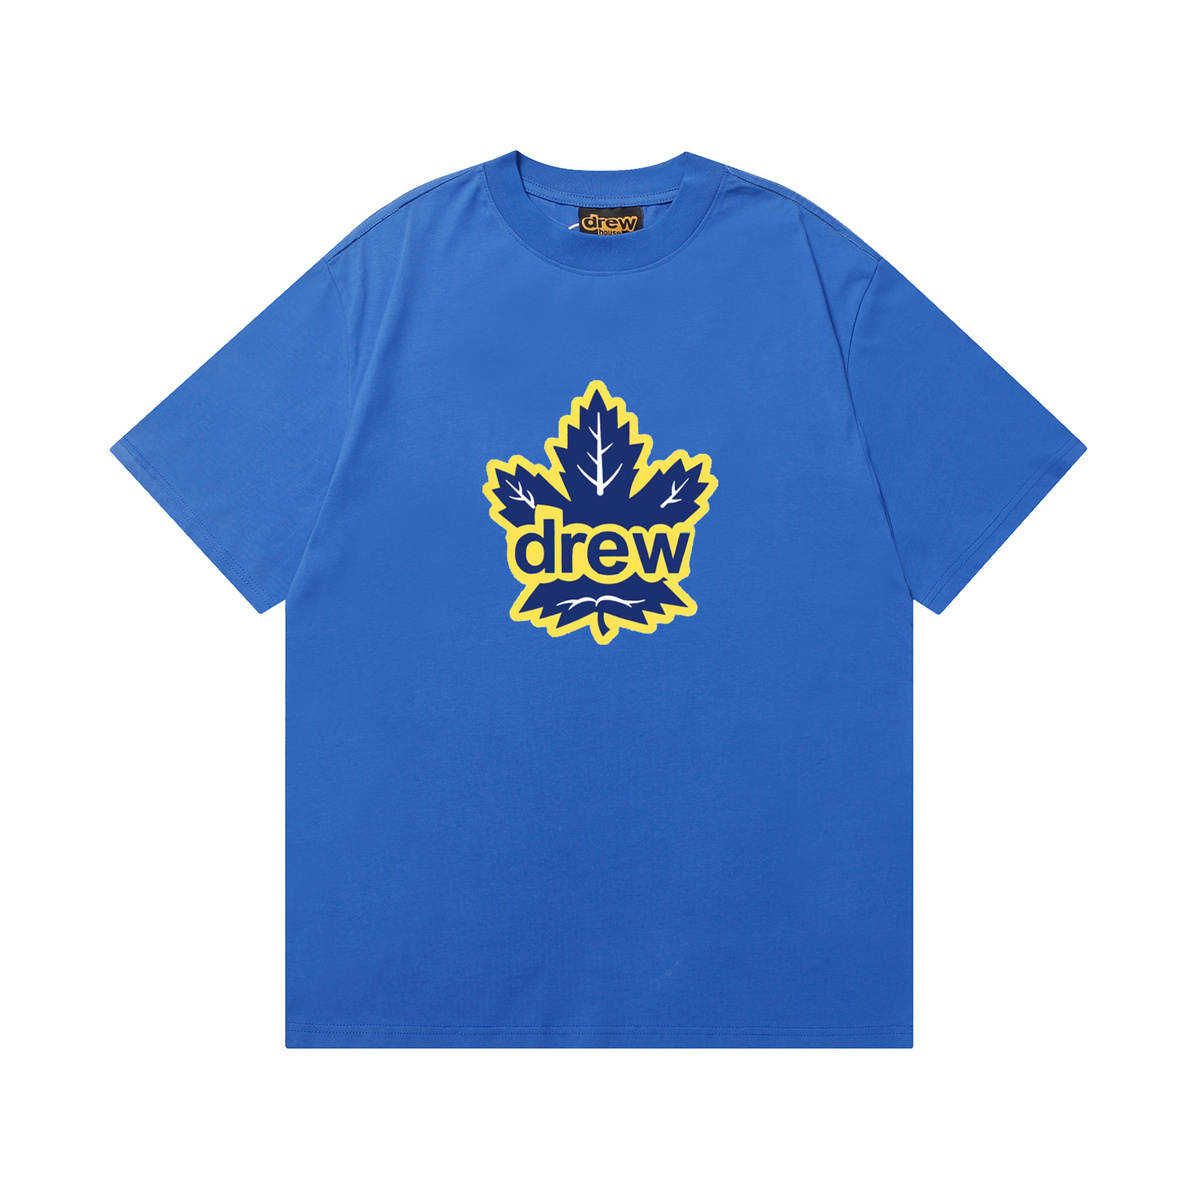 Drew House Maple Leaf T-shirt Navy Blue - Drew House